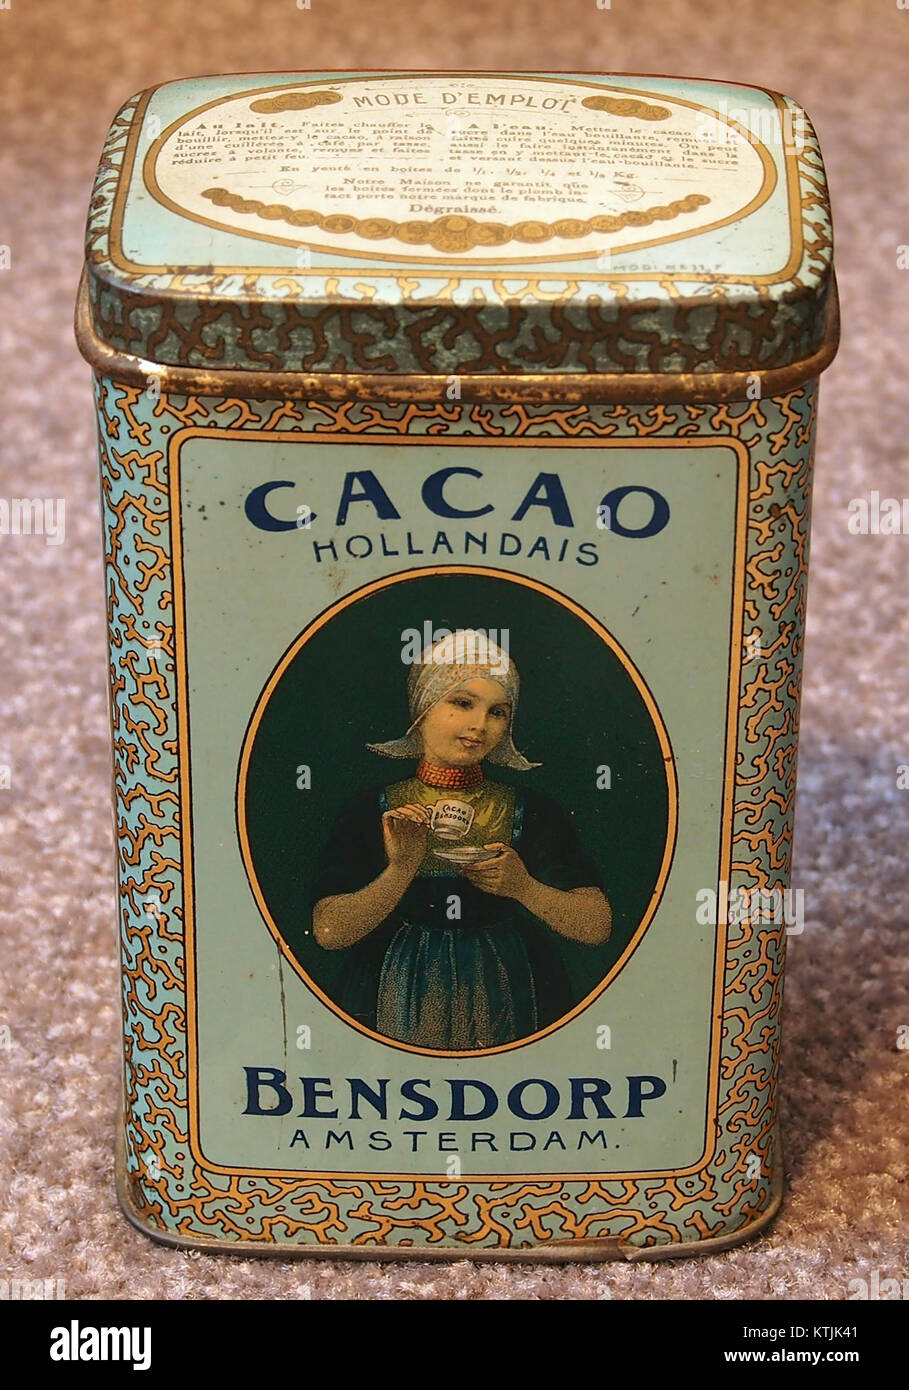 Bensdorp cacao hollandais blikje, foto 1, voorkant Stock Photo